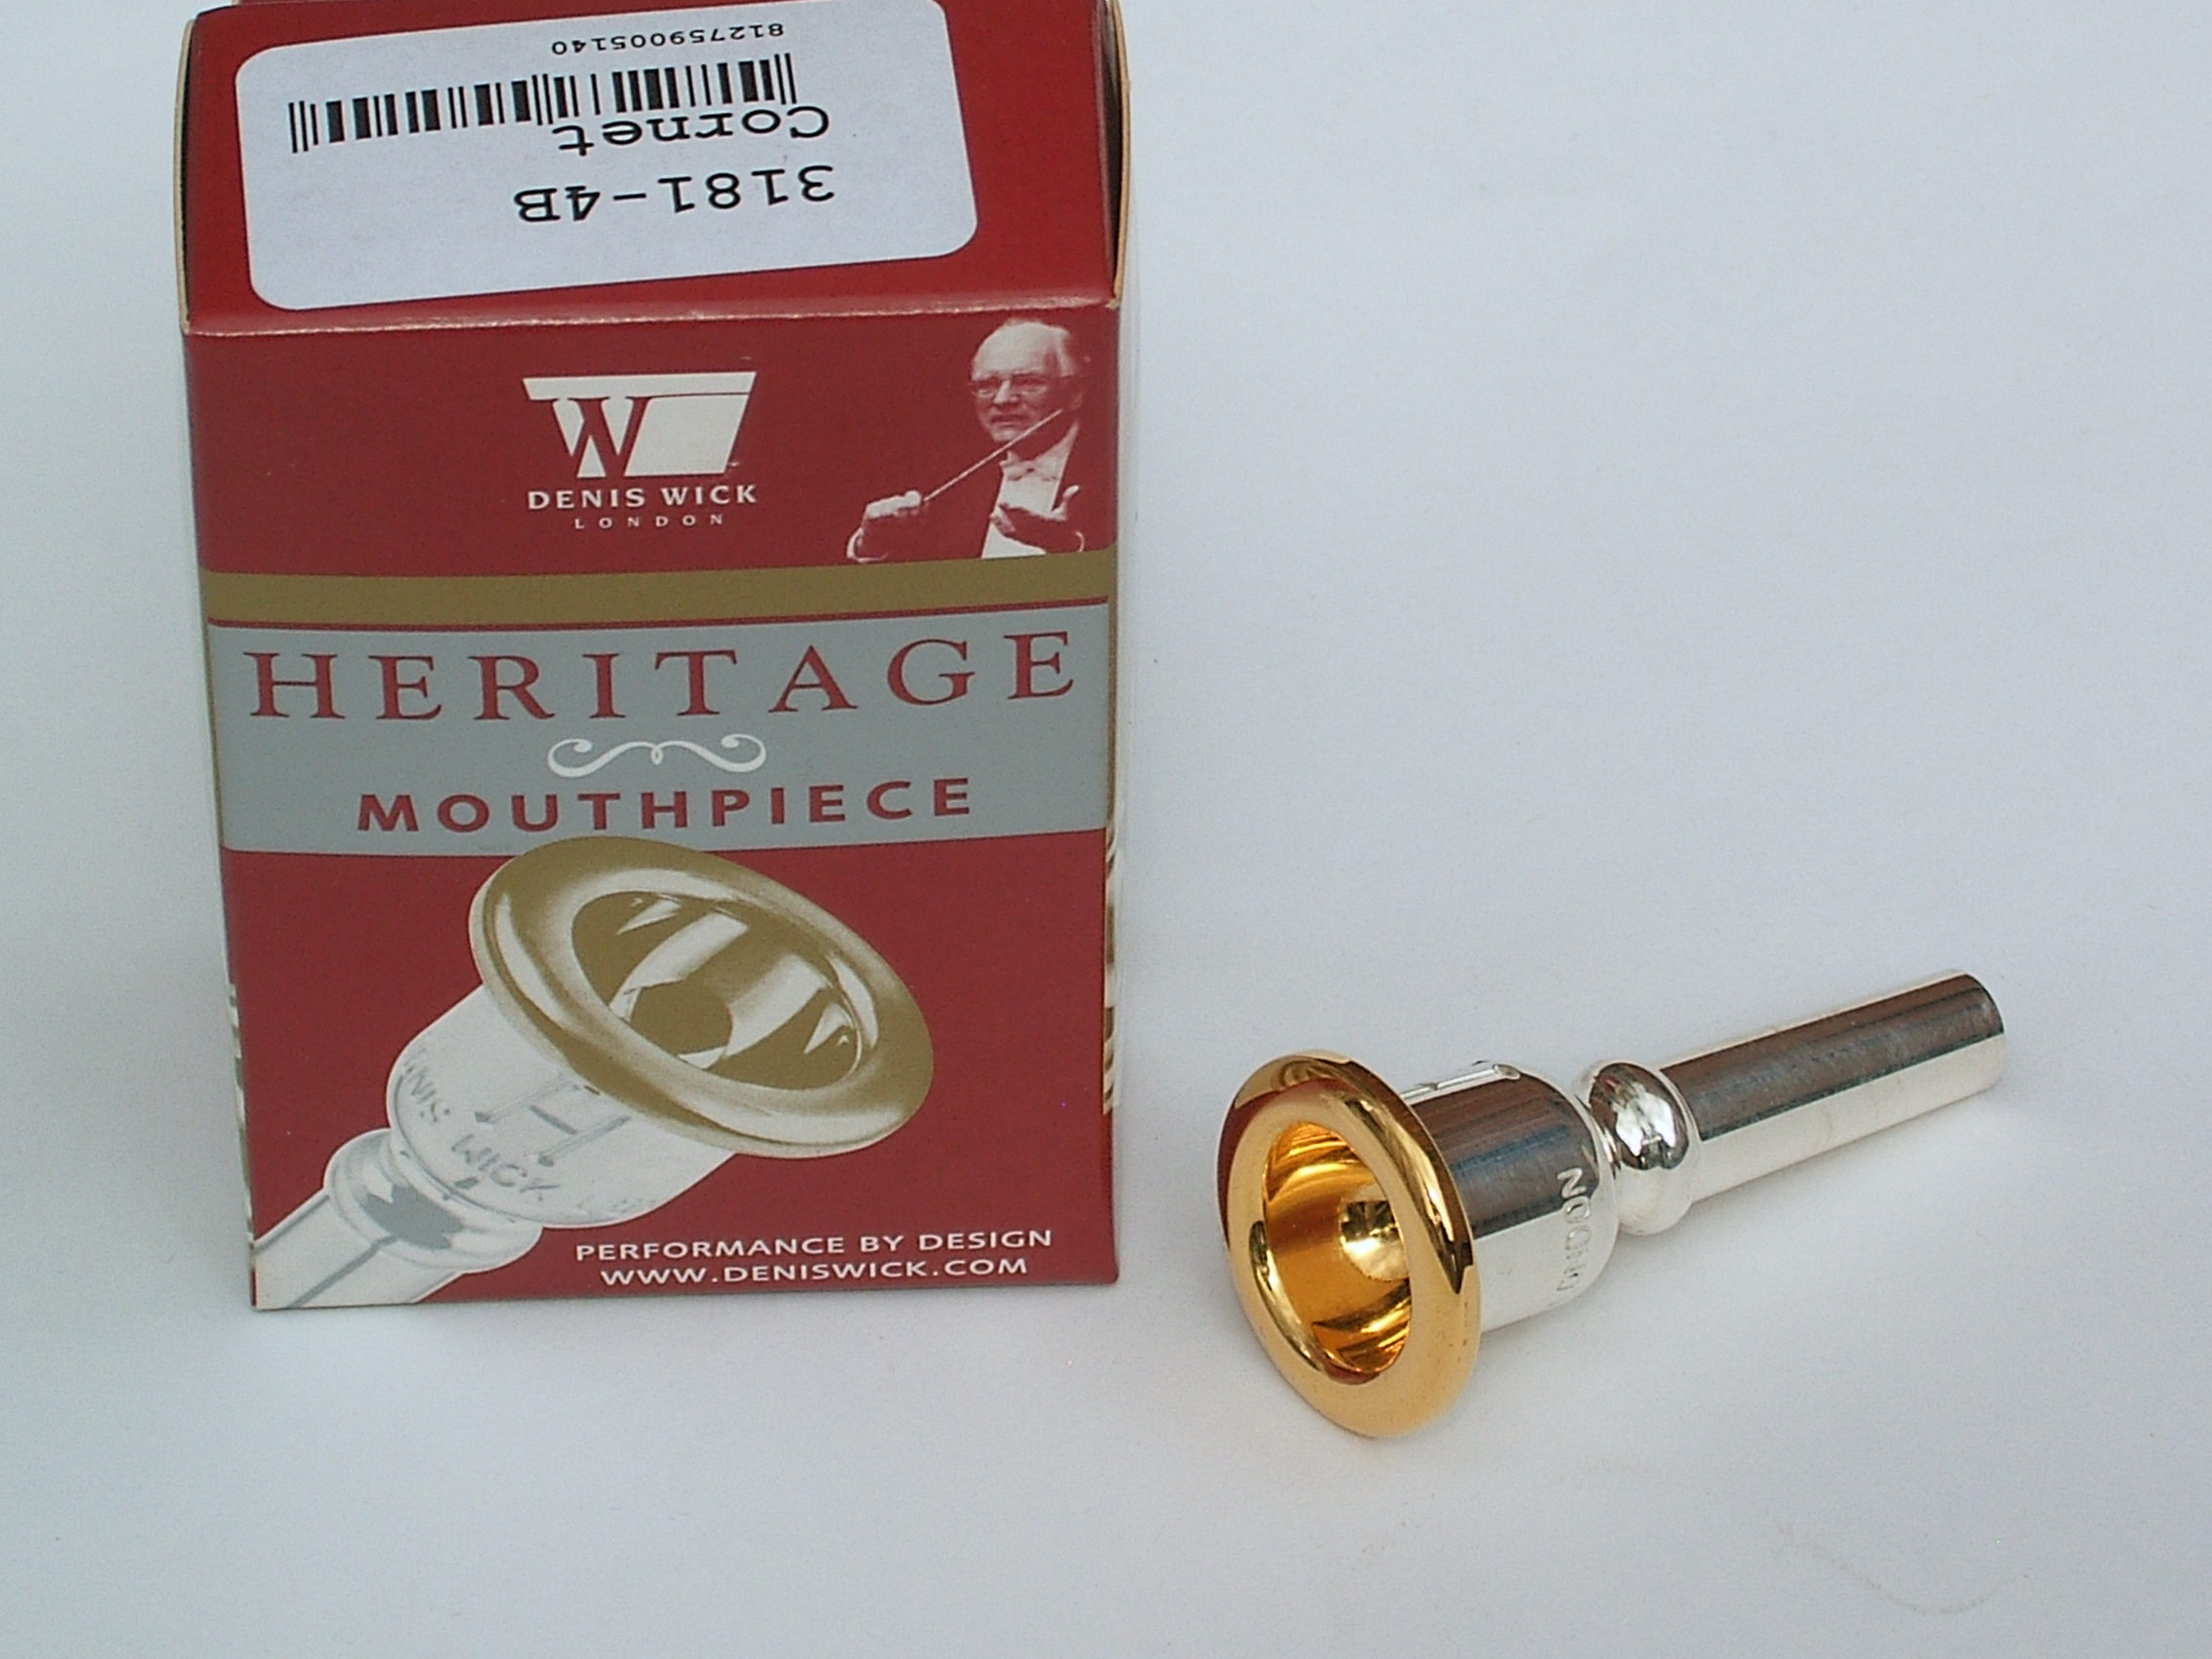 Denis Wick Heritage Model Cornet Mouthpiece, Wrights Music